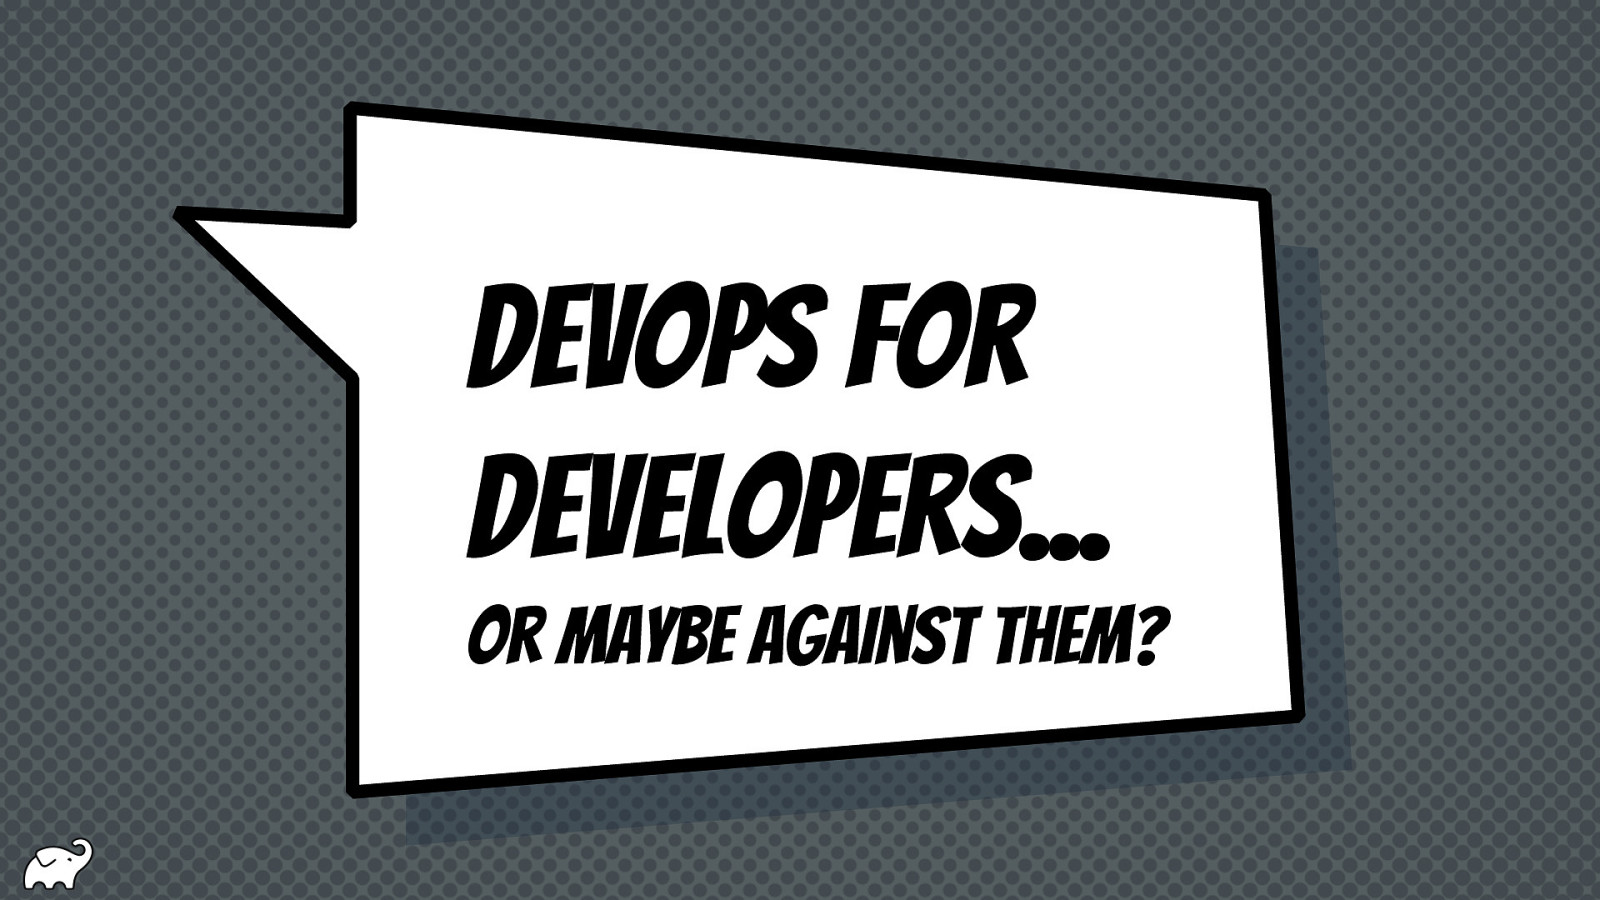 DevOps for developers (or maybe against them?!) by Baruch Sadogursky